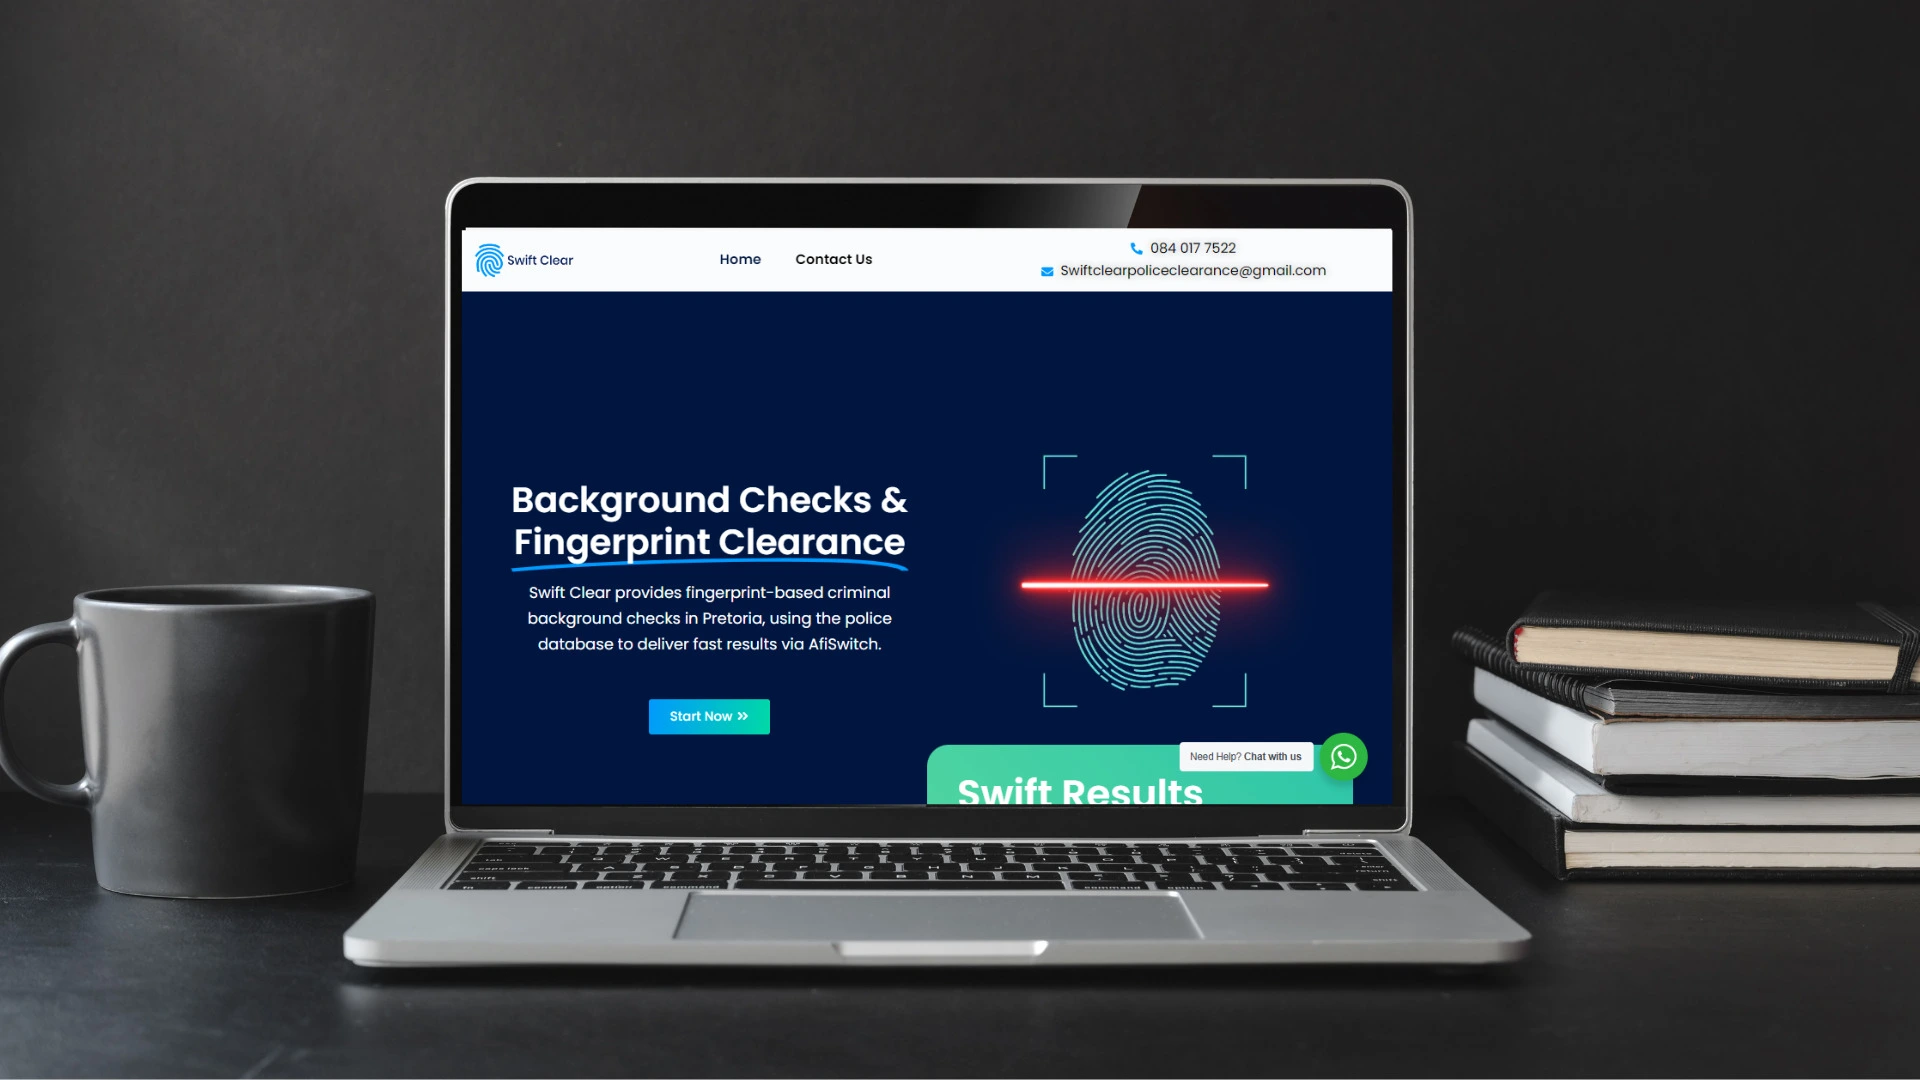 Local fingerprint biometrics website displayed on a laptop